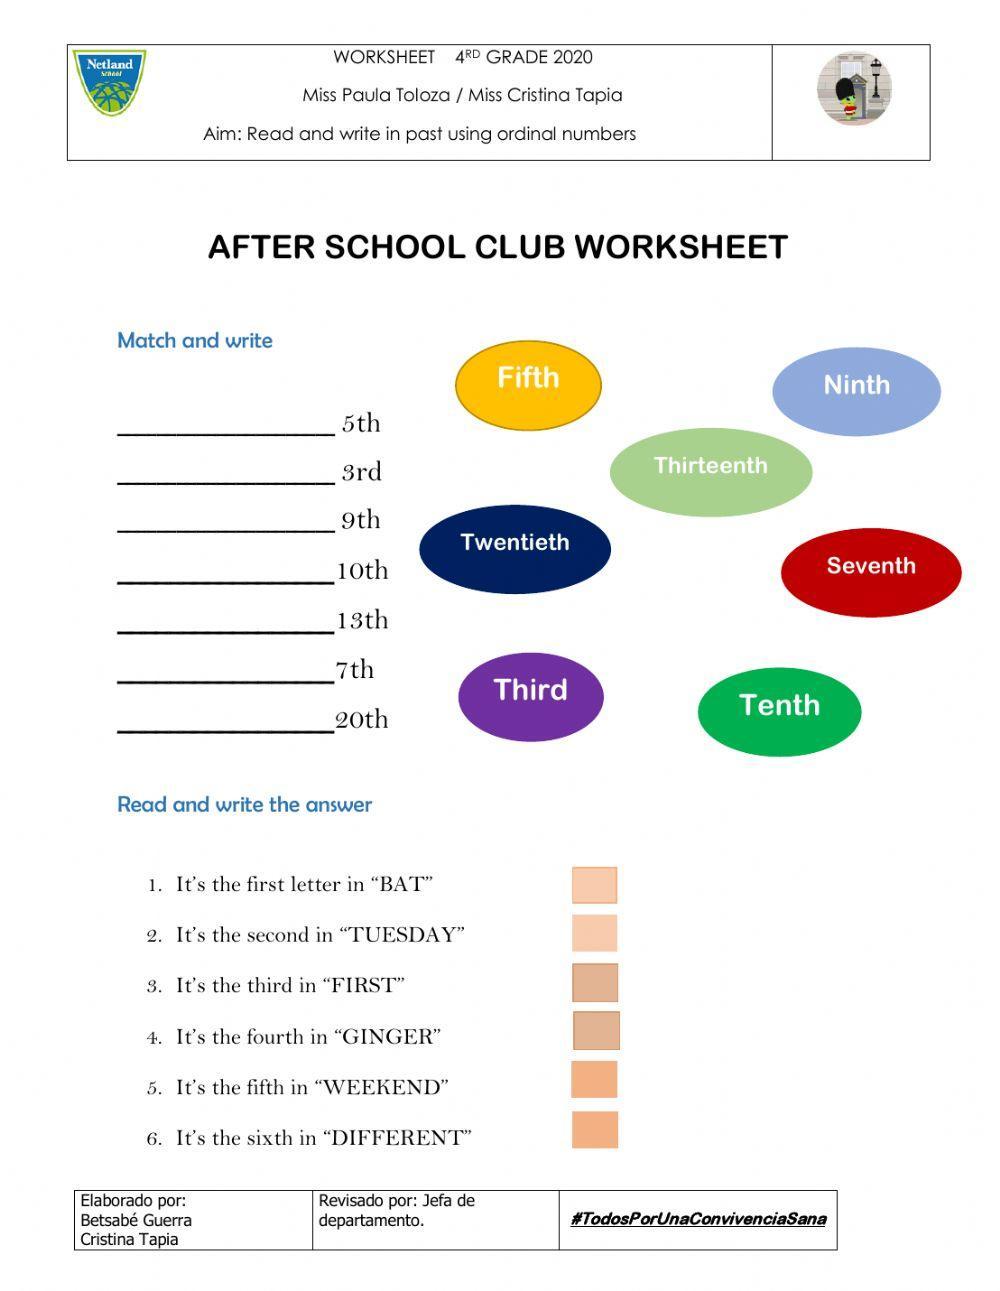 After school club worksheet